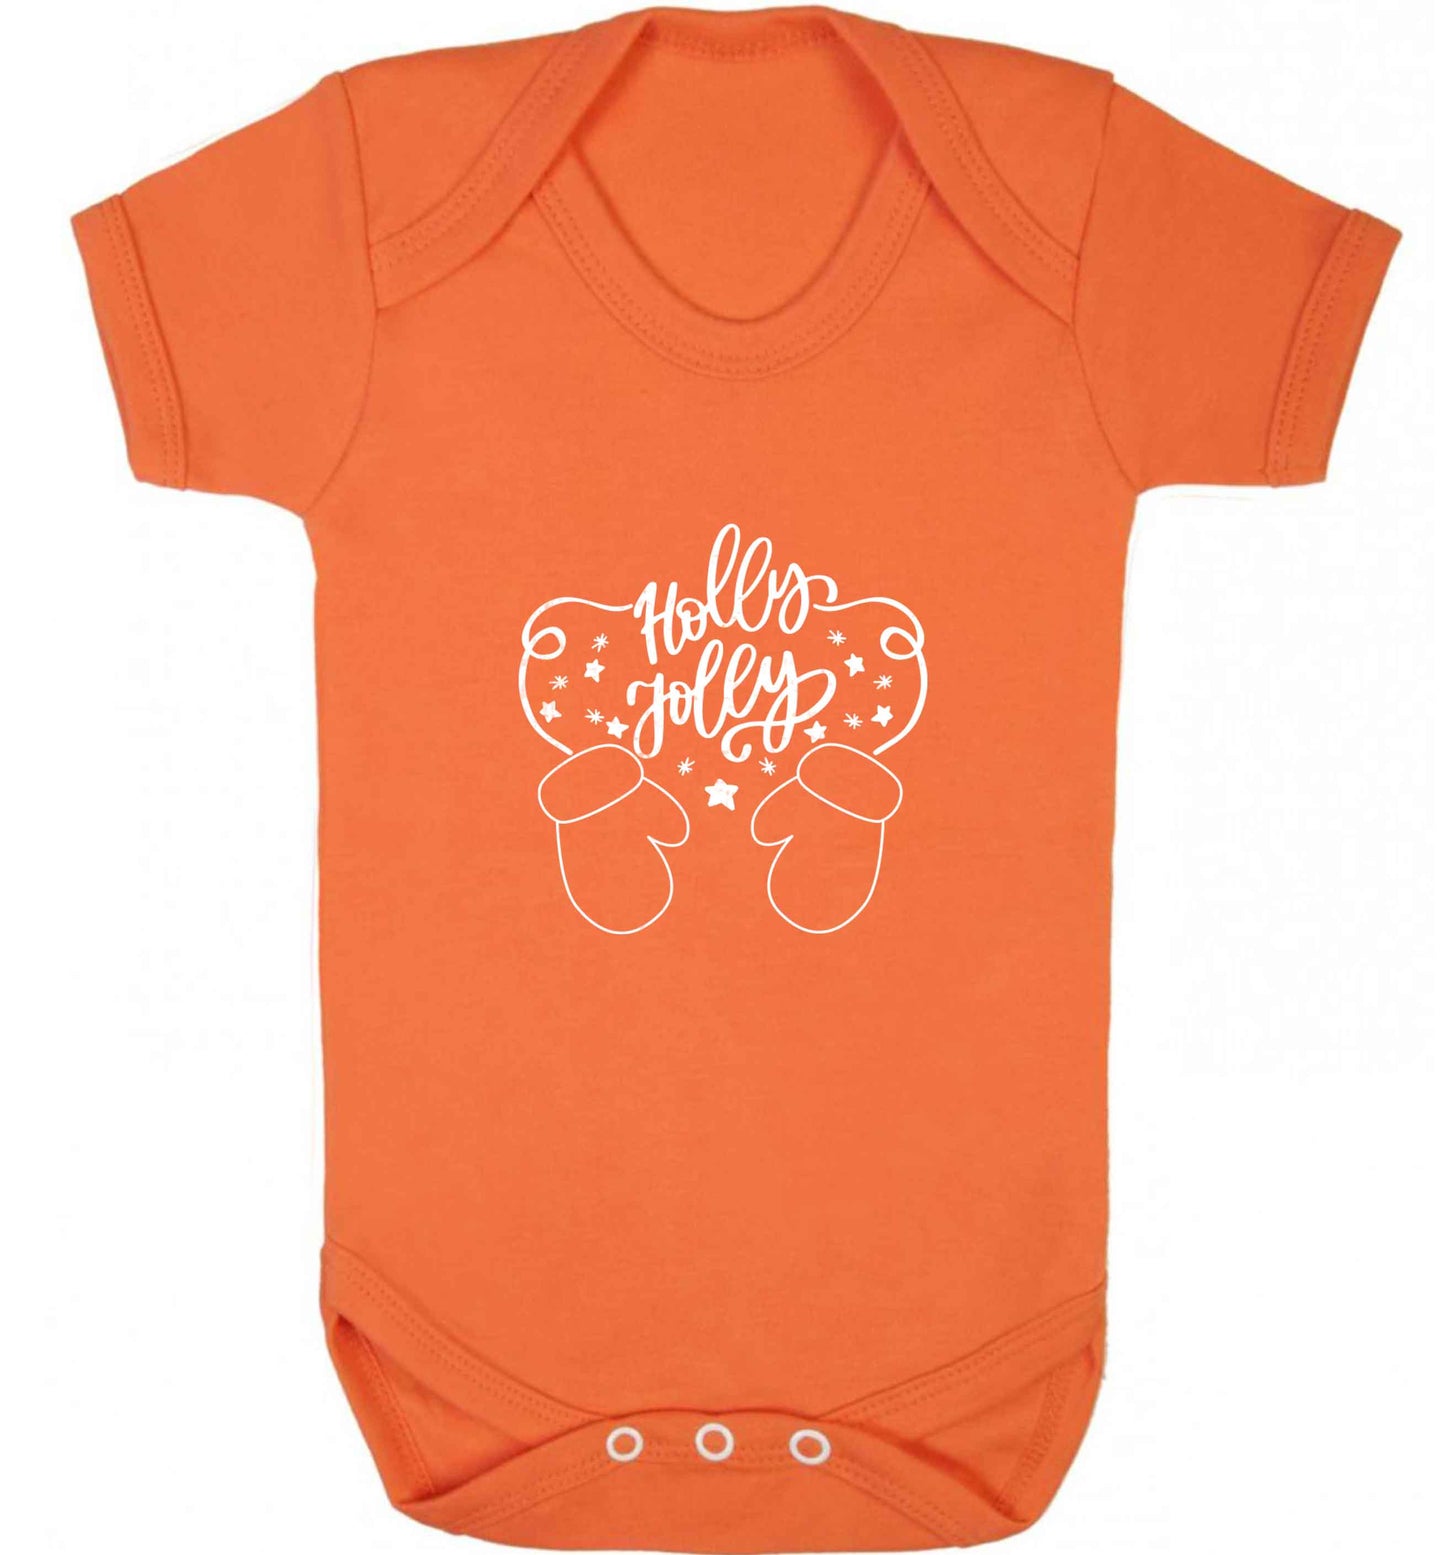 Holly jolly baby vest orange 18-24 months